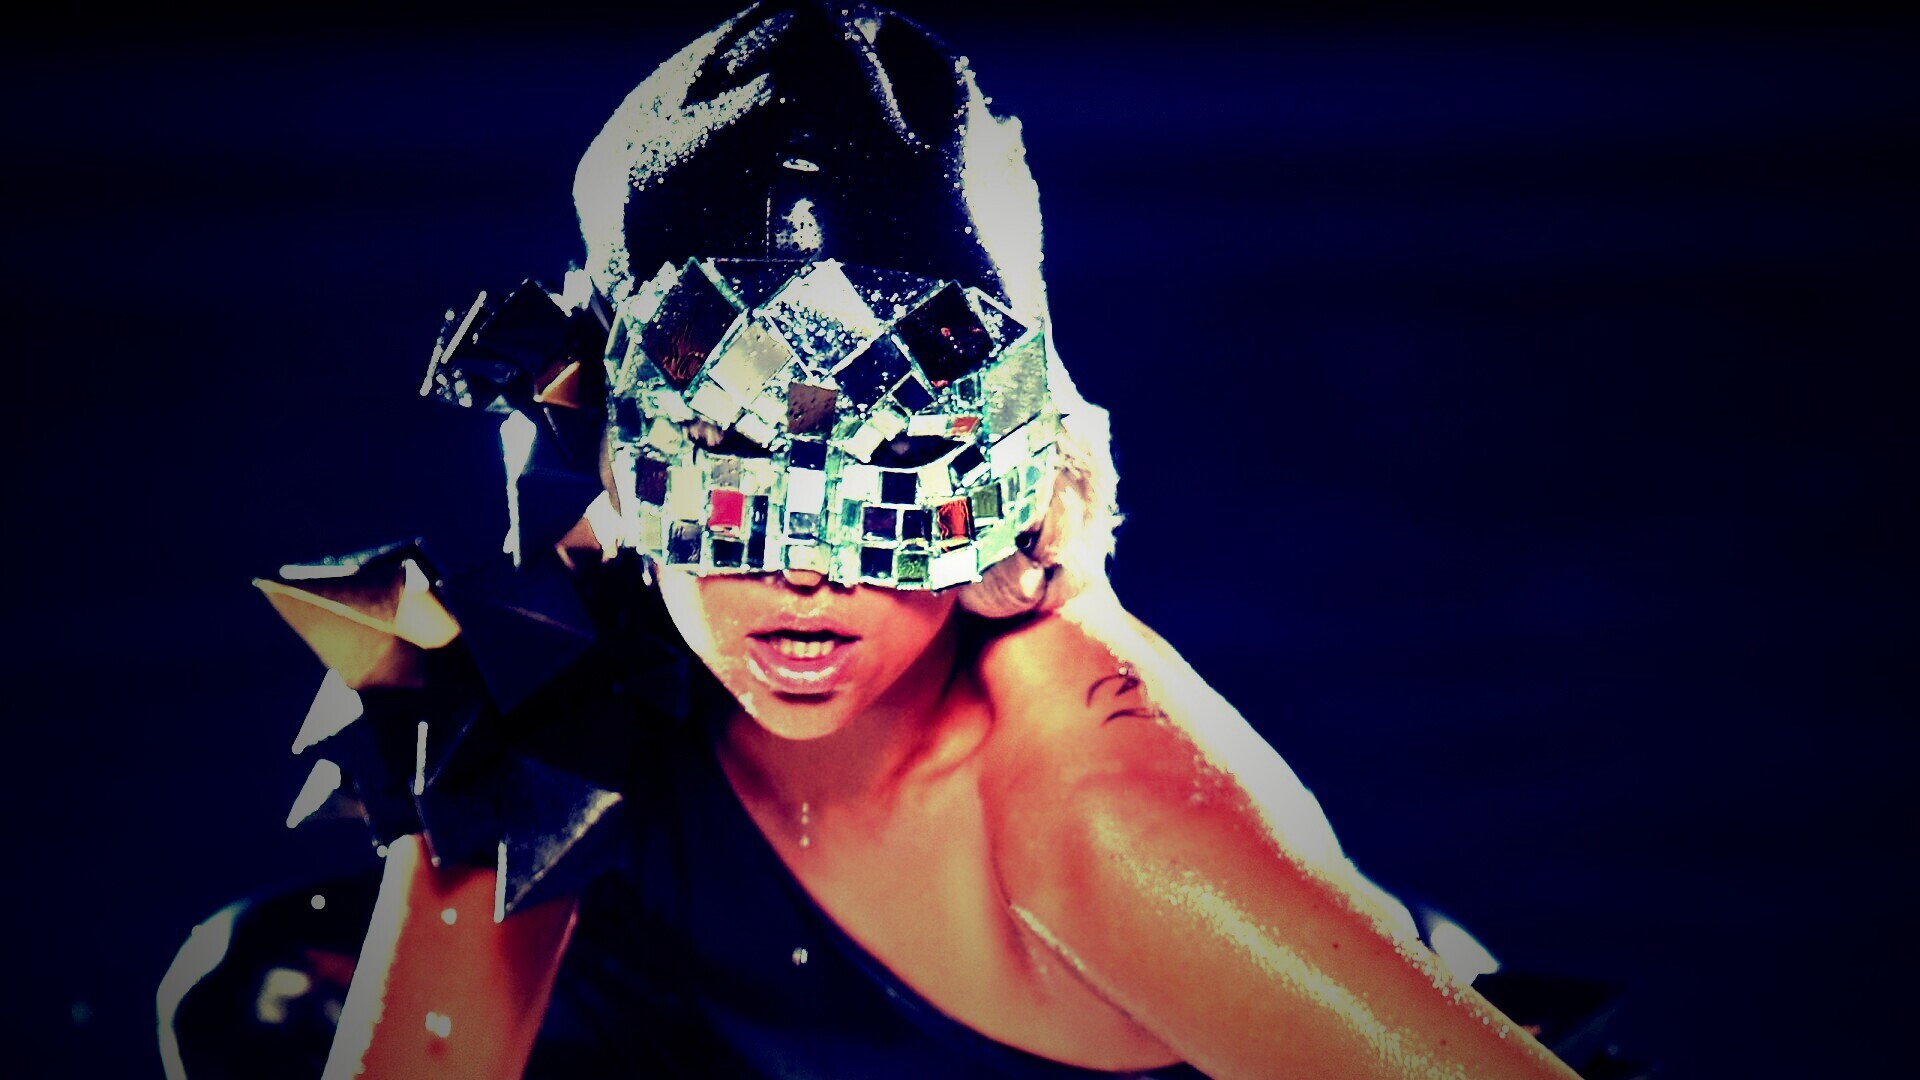 Леди Гага. Леди Гага обои. Леди Гага сценические образы. Караоке леди гага